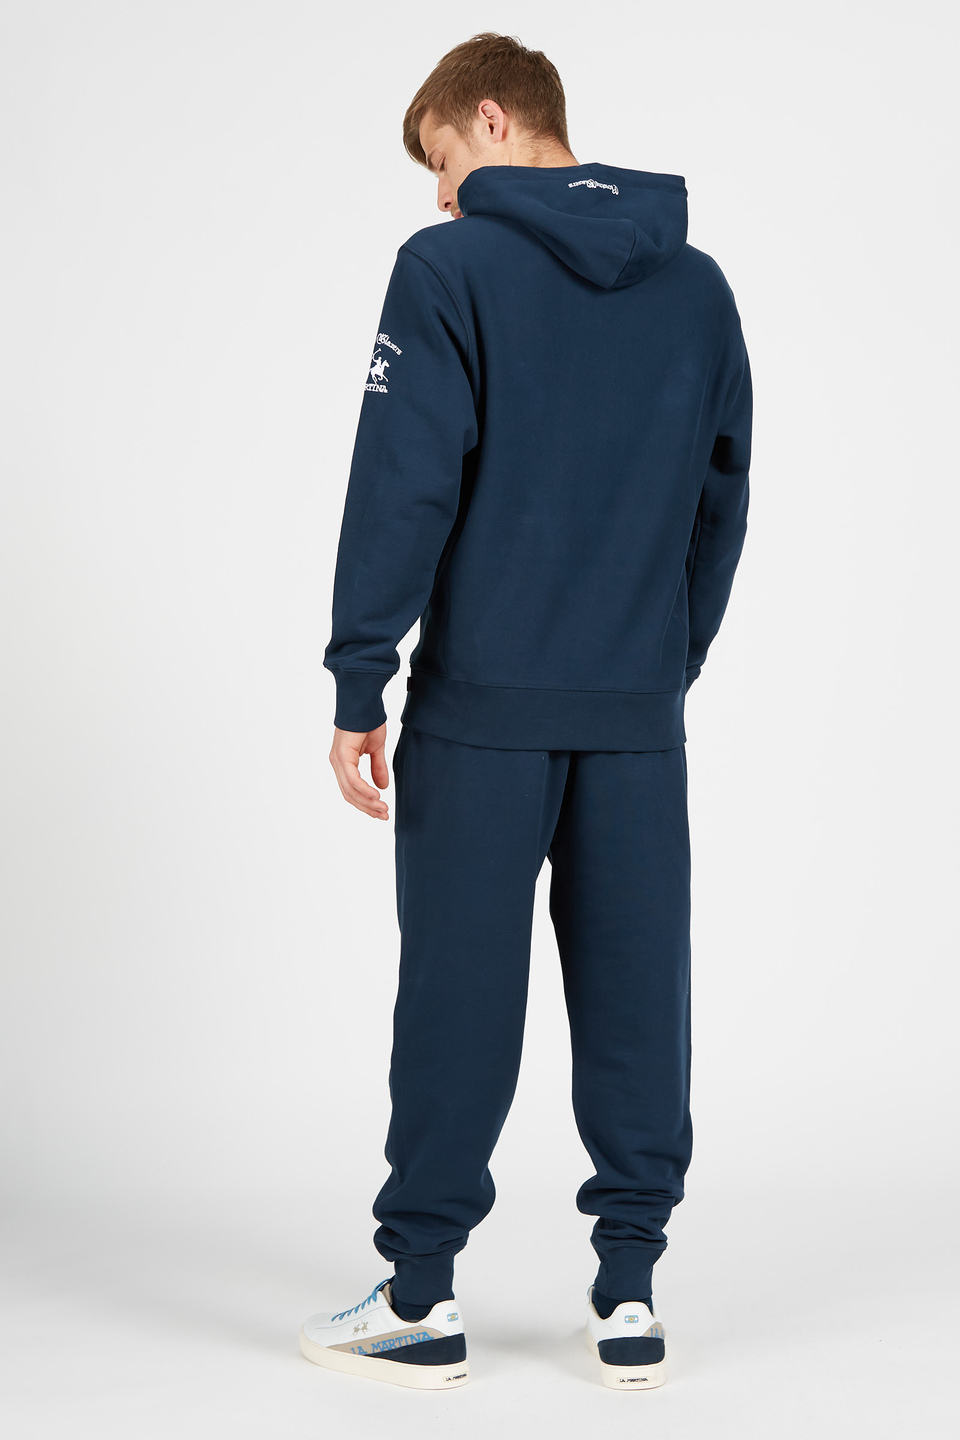 Comfort fit hooded sweatshirt | La Martina - Official Online Shop